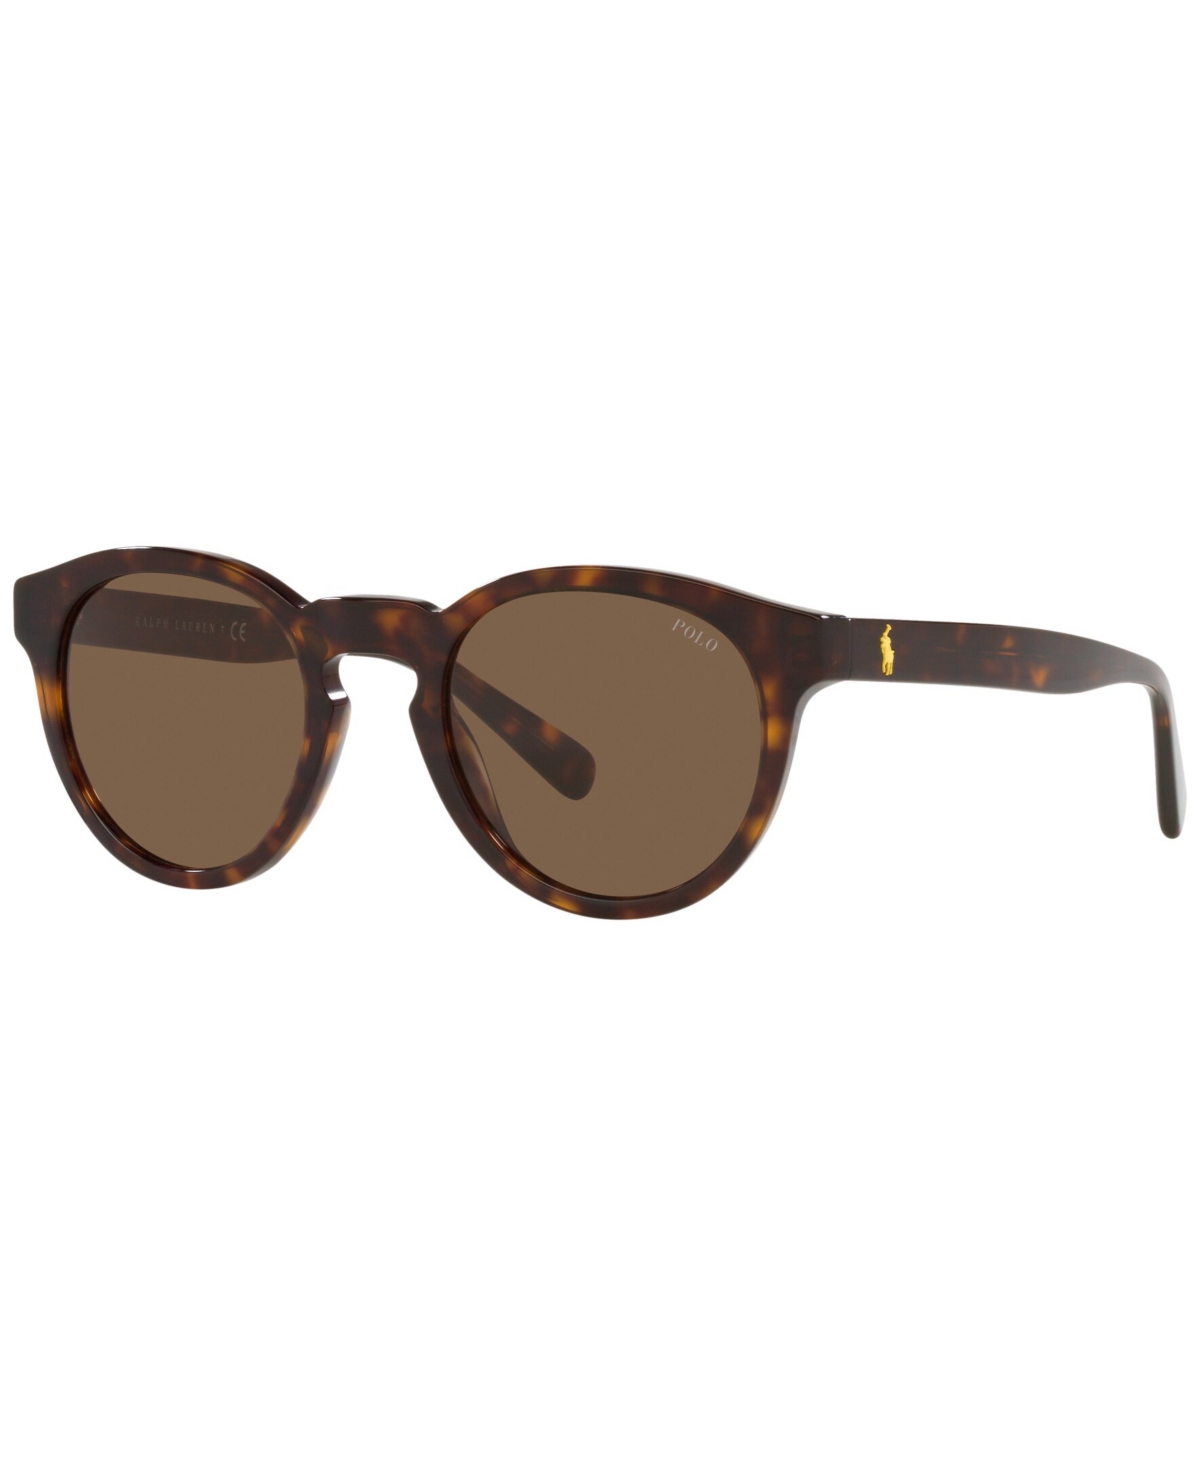 Polo Ralph Lauren Men's Sunglasses, Ph4184 49 In Shiny Dark Havana